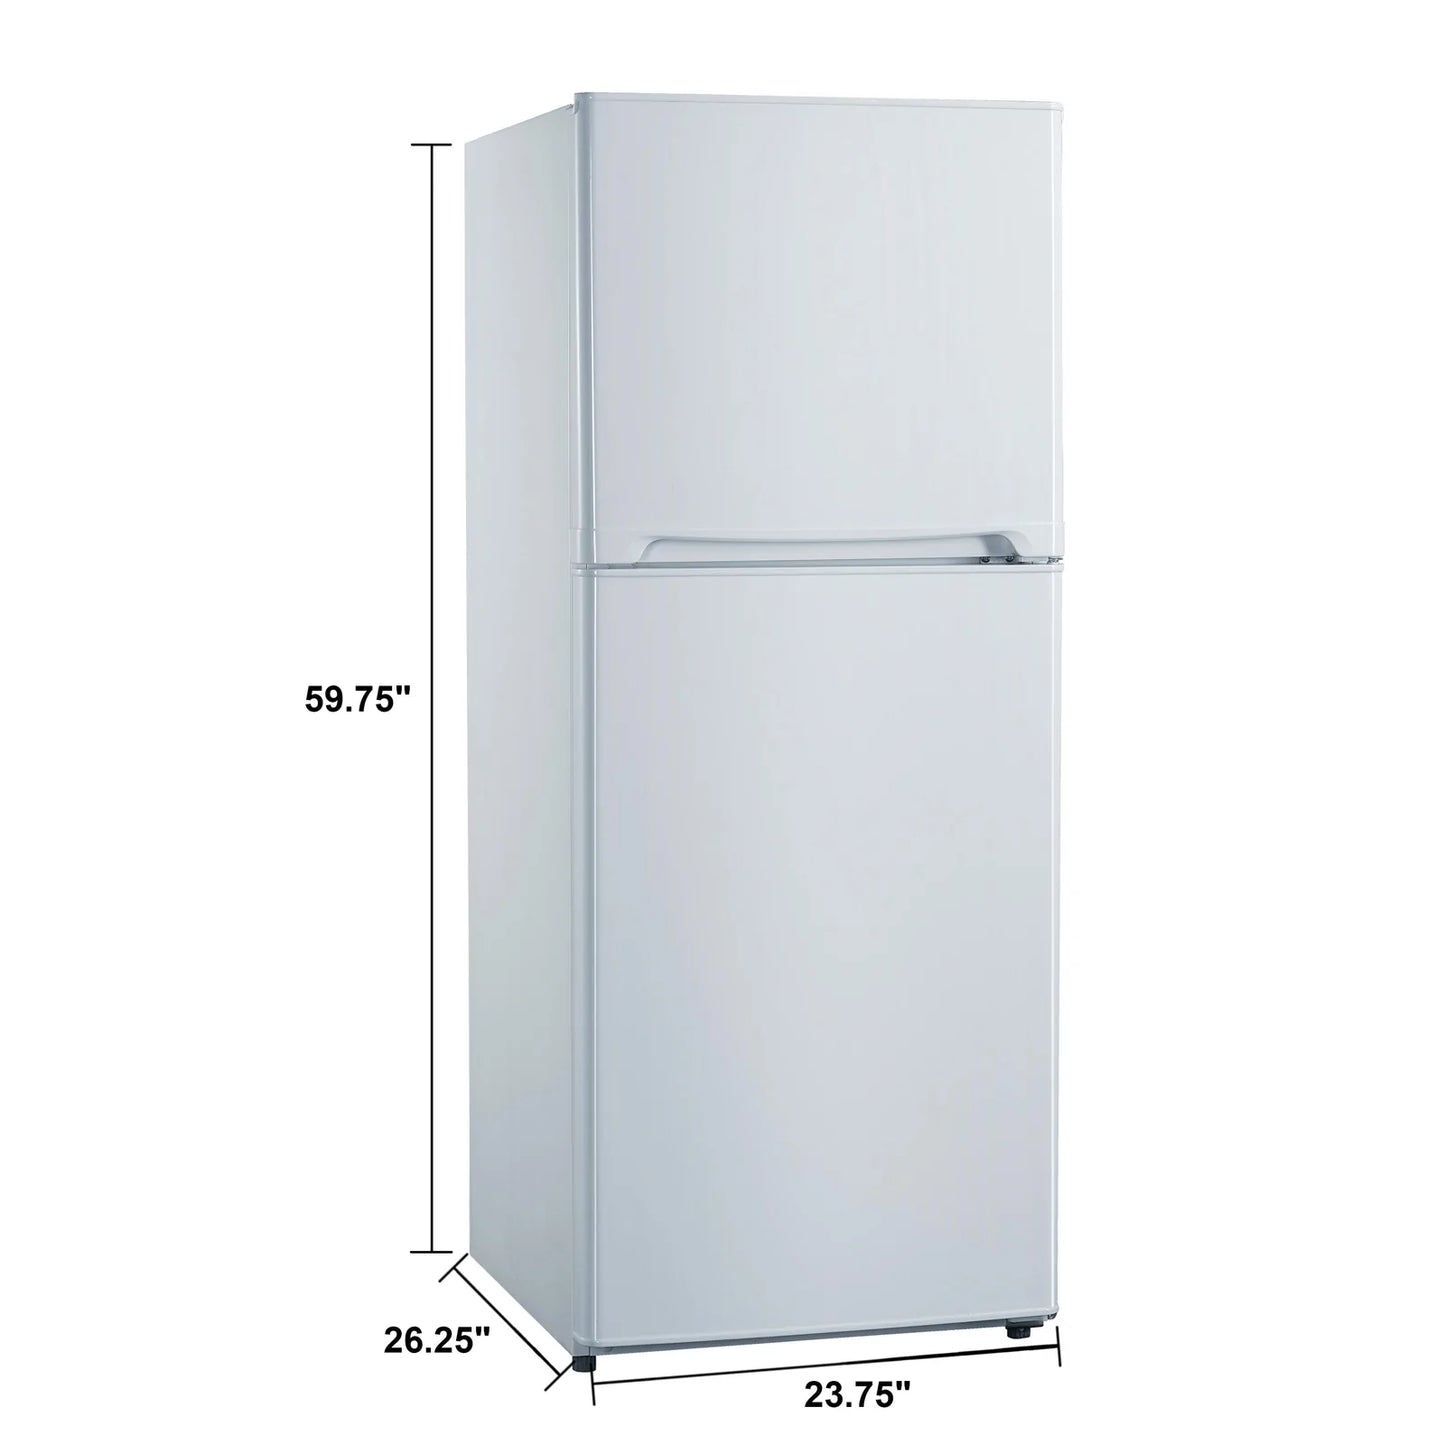 Freezer Refrigerator with 10 cu. ft. Total Capacity, 2.7 cu. ft. Freezer Capacity - AVANTI - FF10B0W